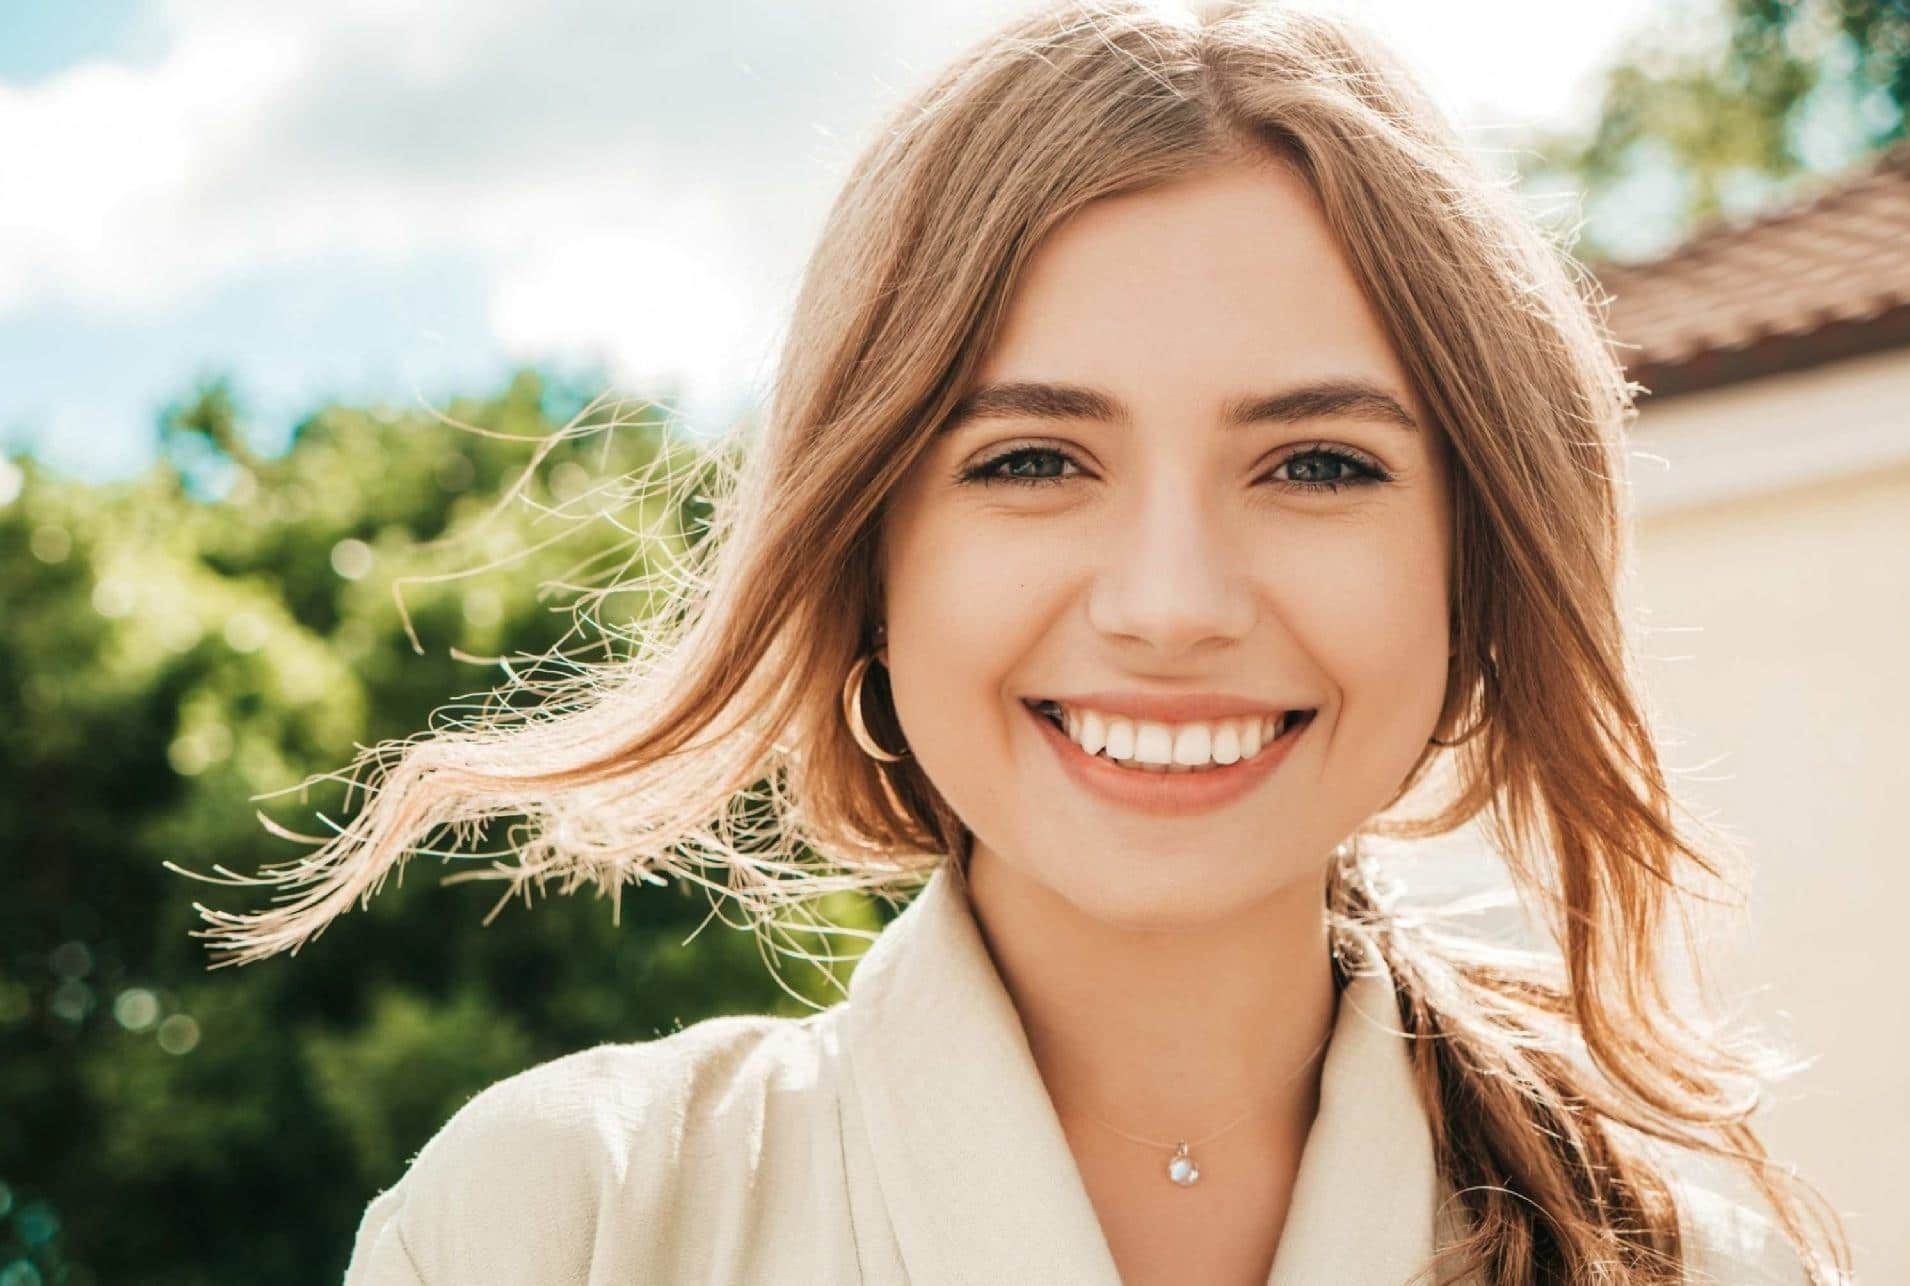 Young woman smiling showing beautiful teeth